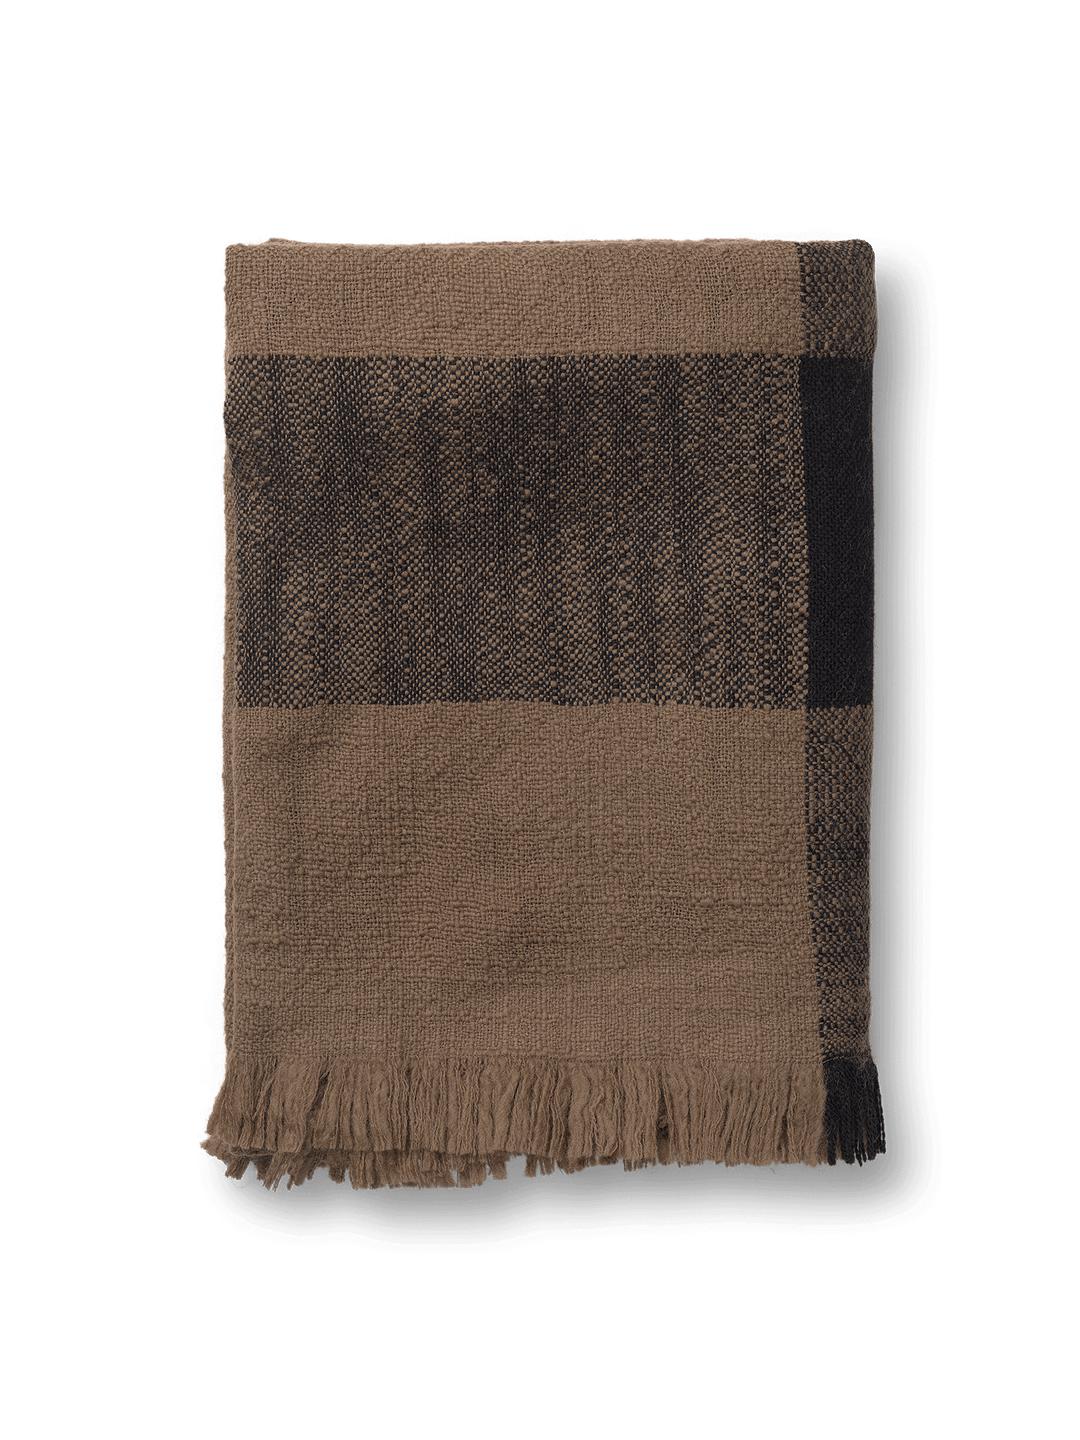 Ferm Living Dry Blanket, Sugar Kelp/Black